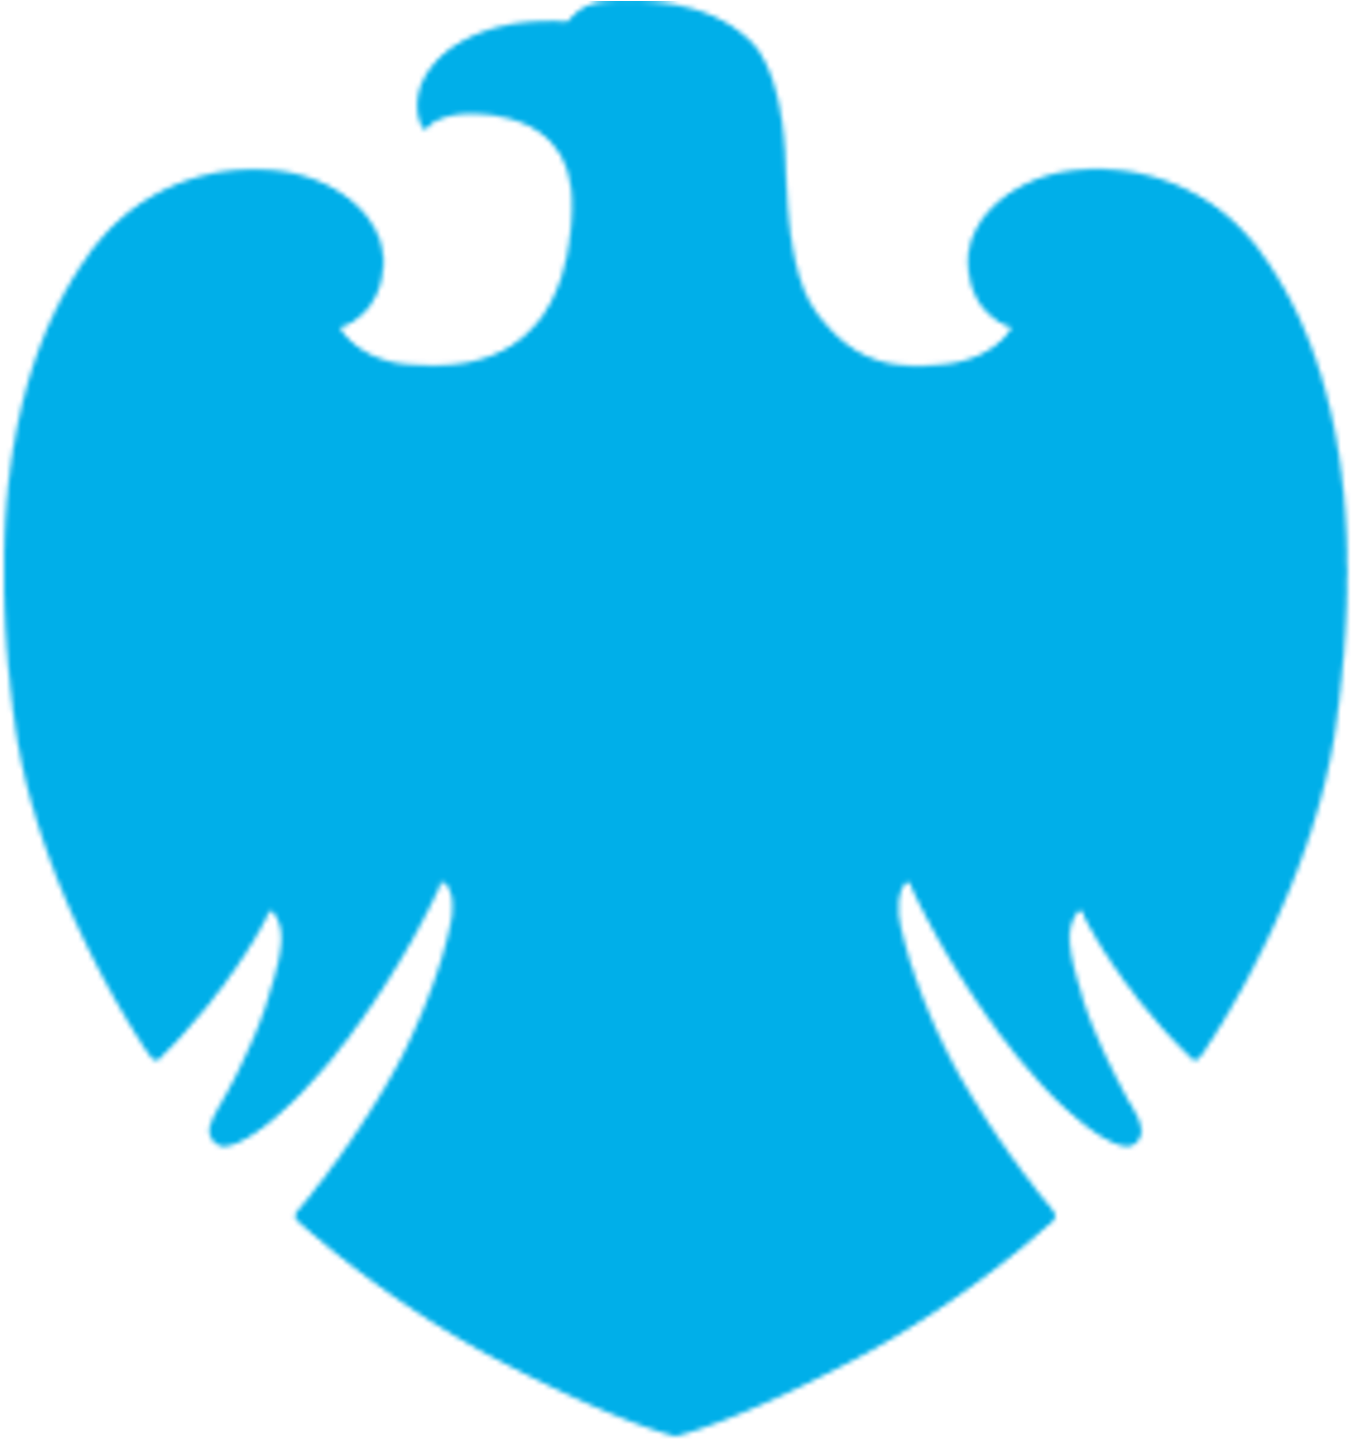 Pune Logo Barclays Bank Busin